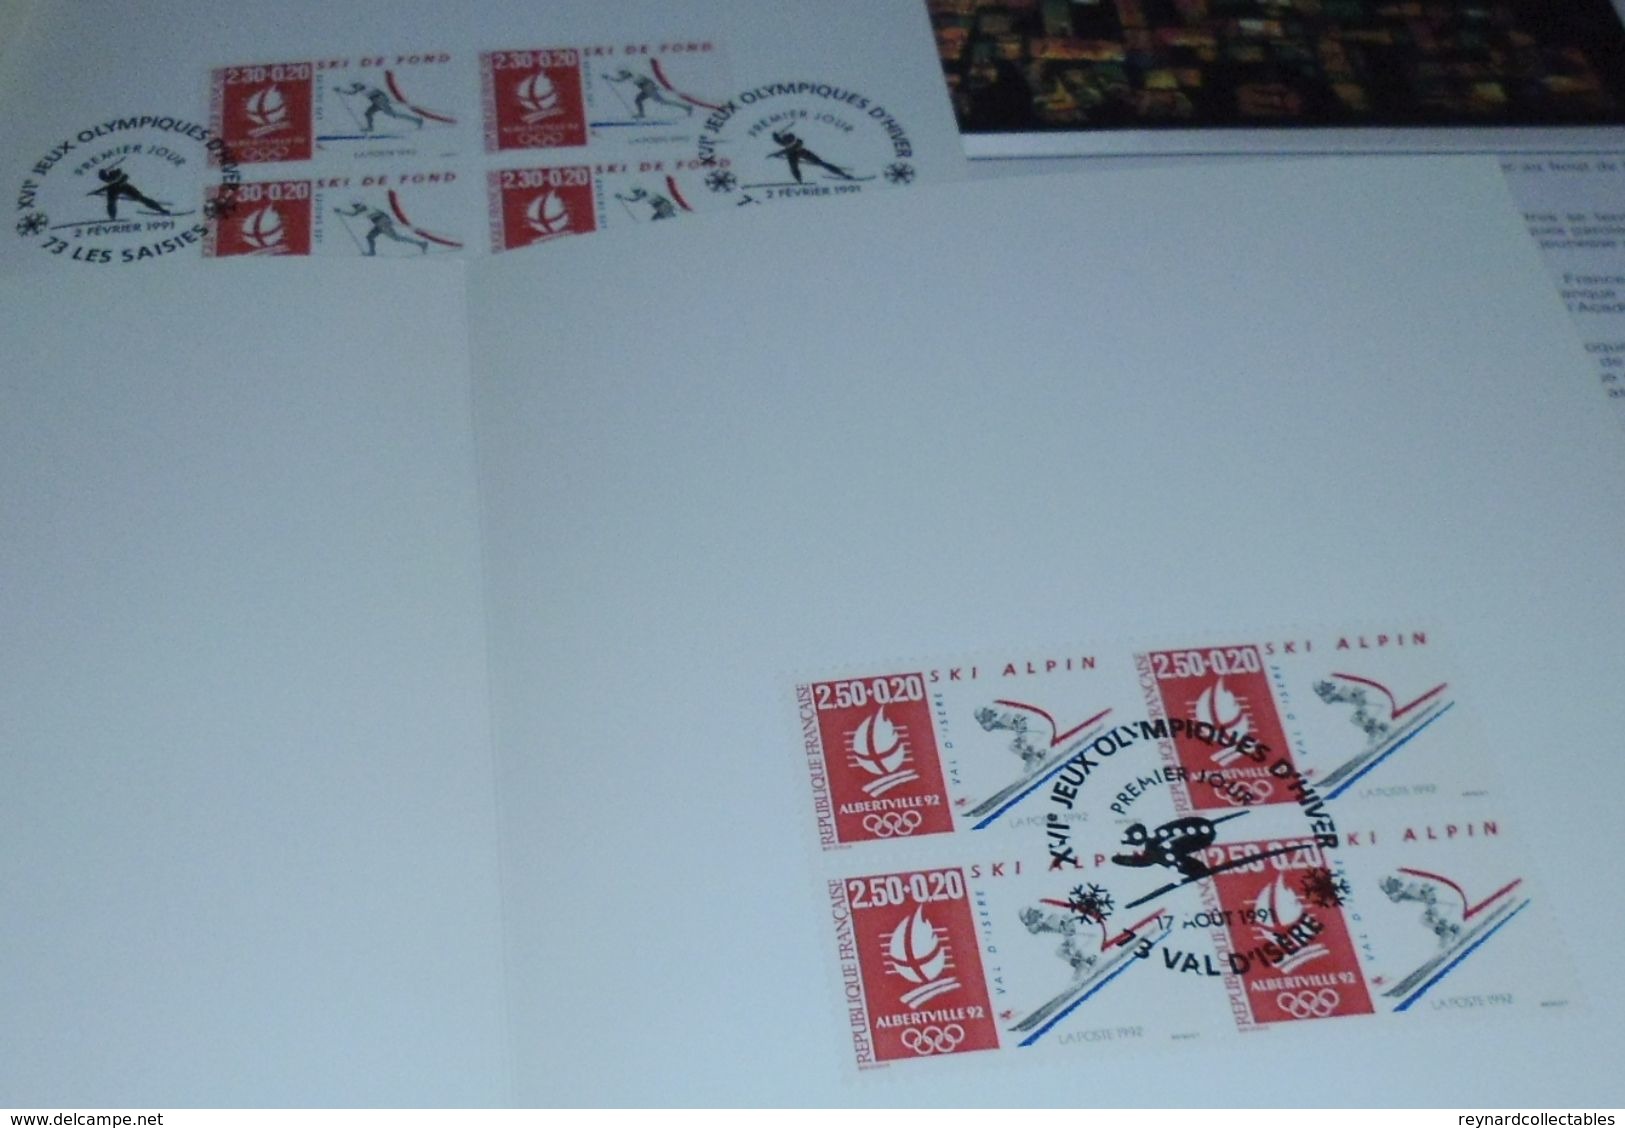 France huge stamp sorter 1000s,S/Books,album, loose,philatelic document,Red Cross/Anti TB booklets